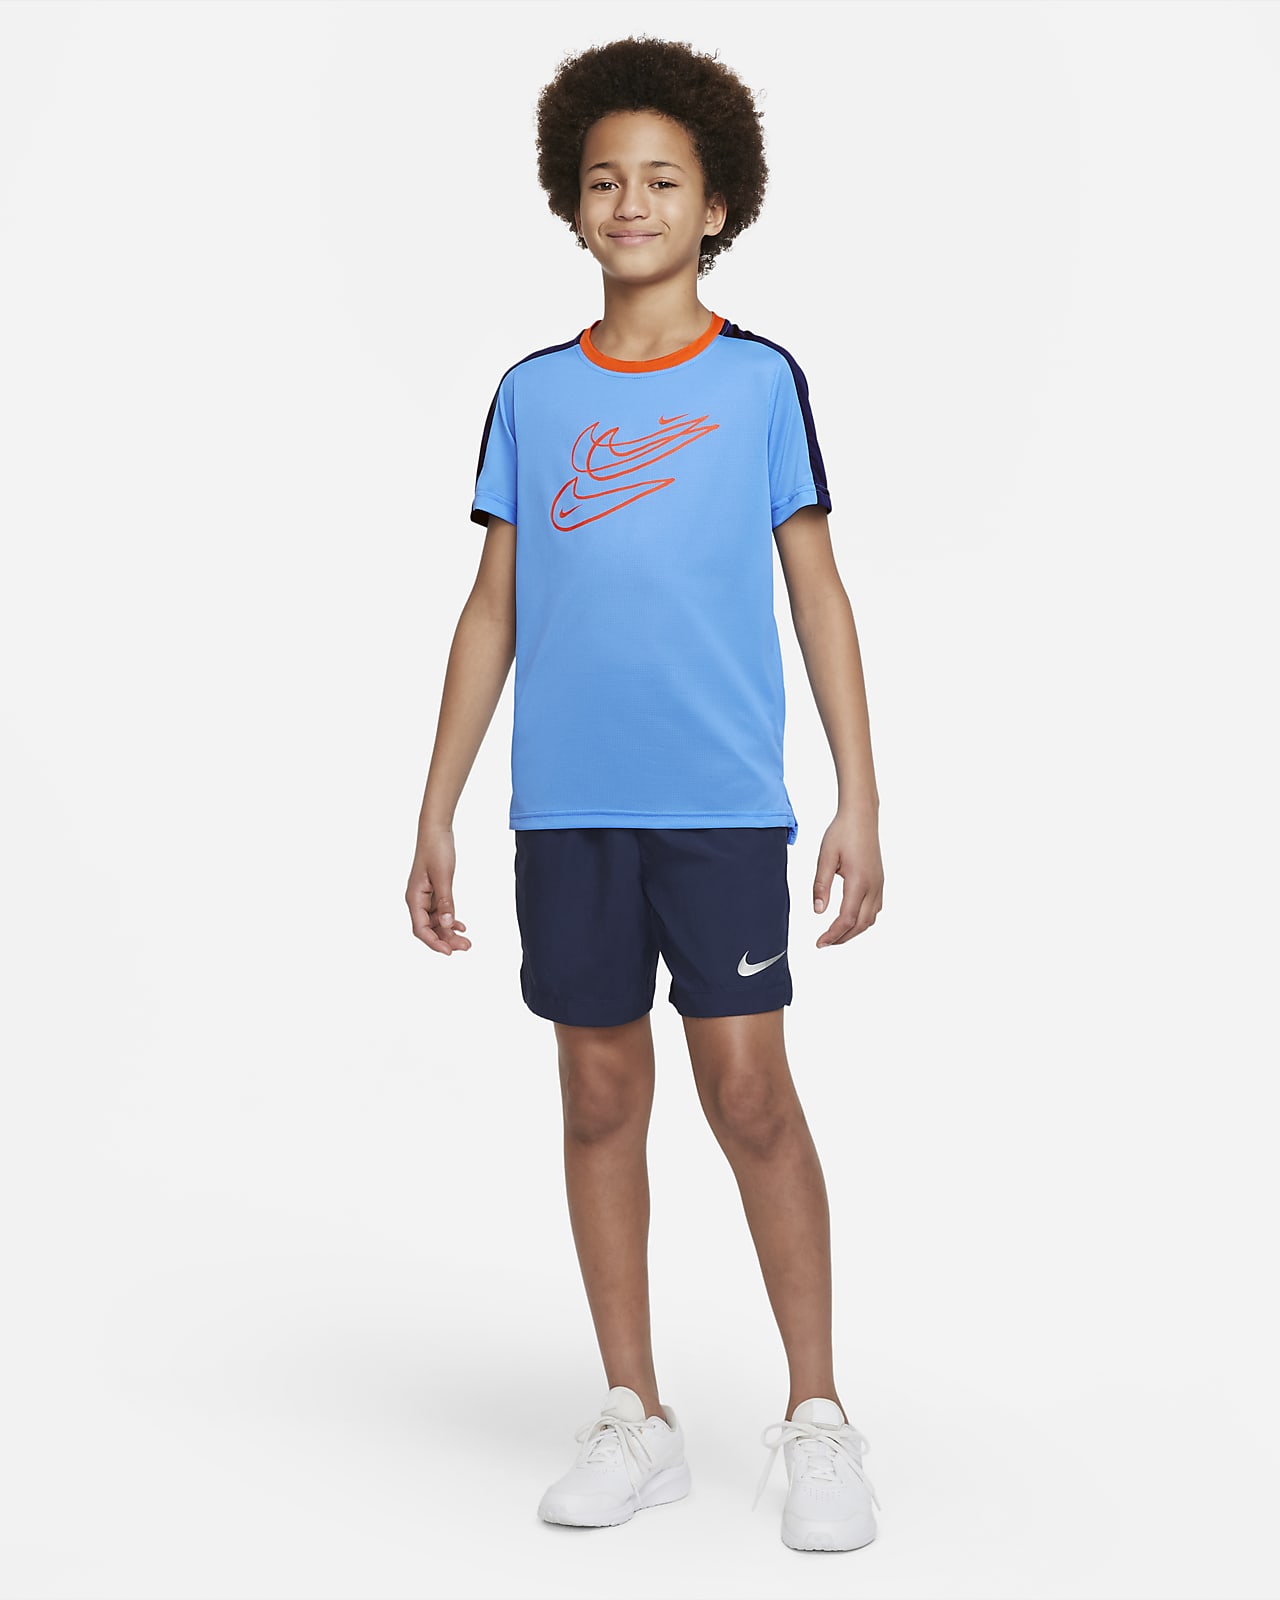 Nike Dri-FIT Big Kids' (Boys') Woven Training Pants.